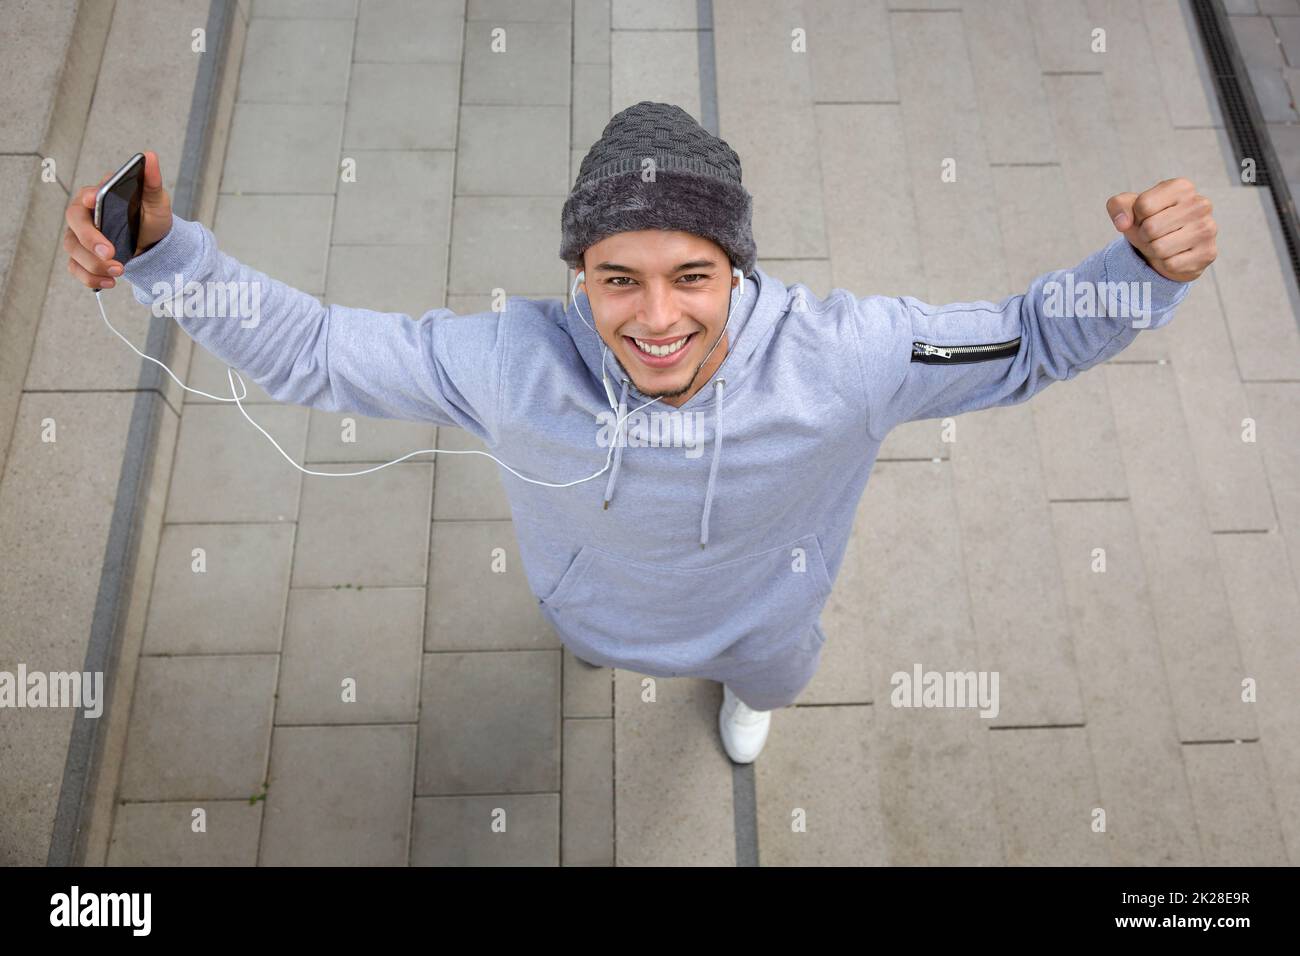 Successful happy smiling young latin man fitness sport sports joy pleasure Stock Photo